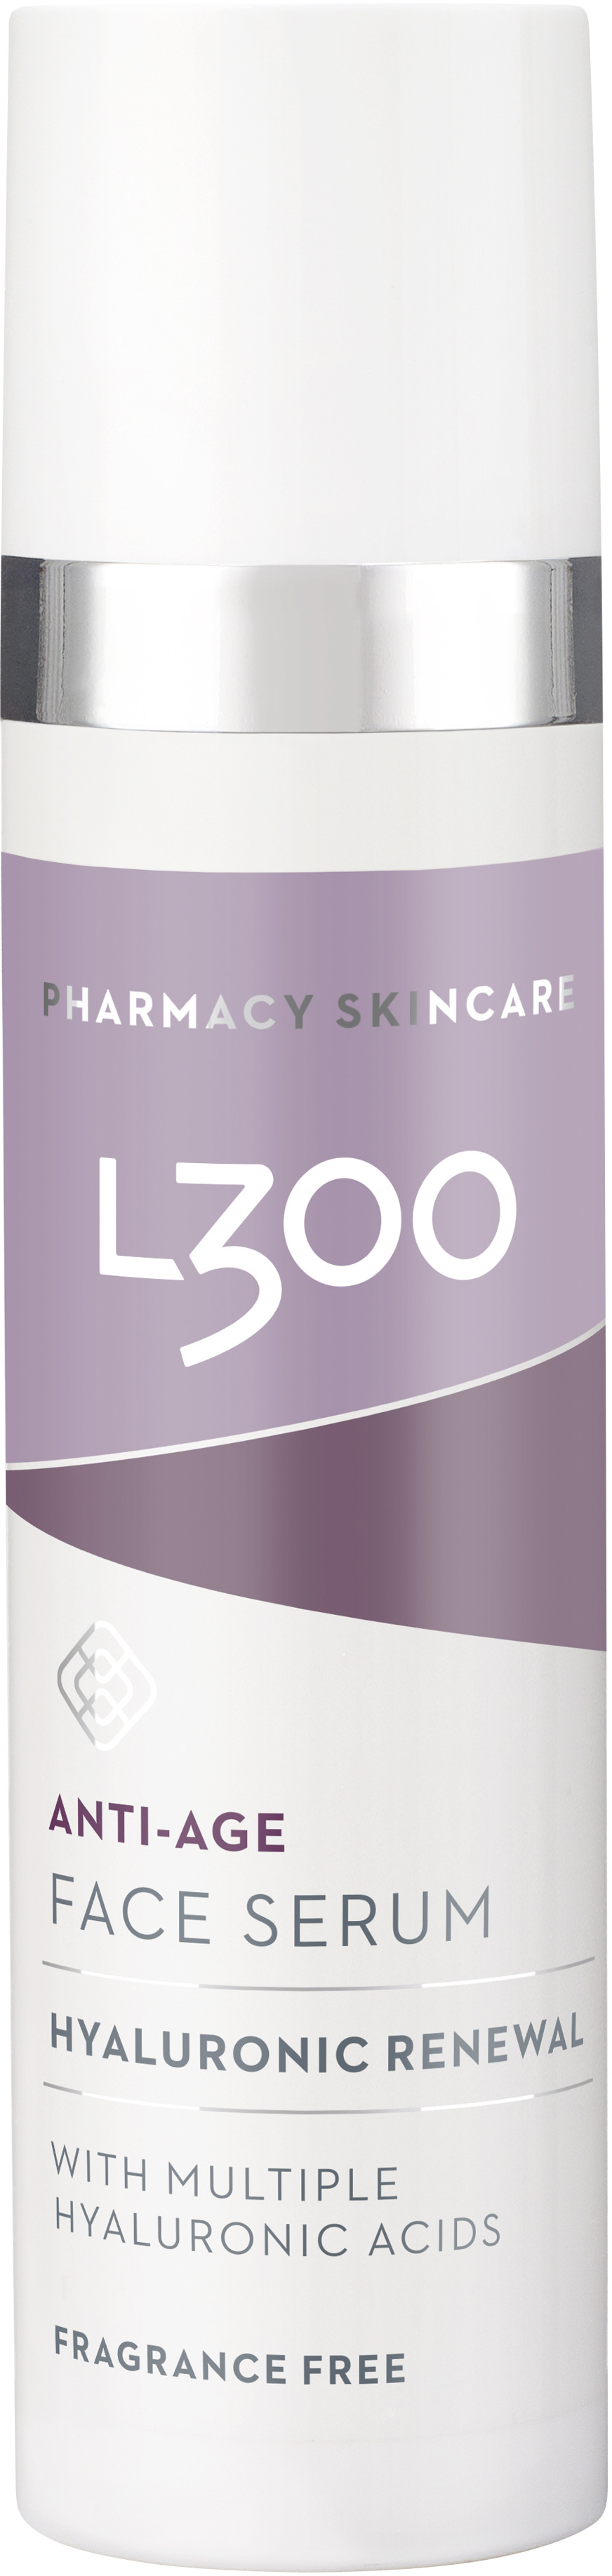 L300 Hyaluronic Renewal Anti-Age Face Serum 30 ml